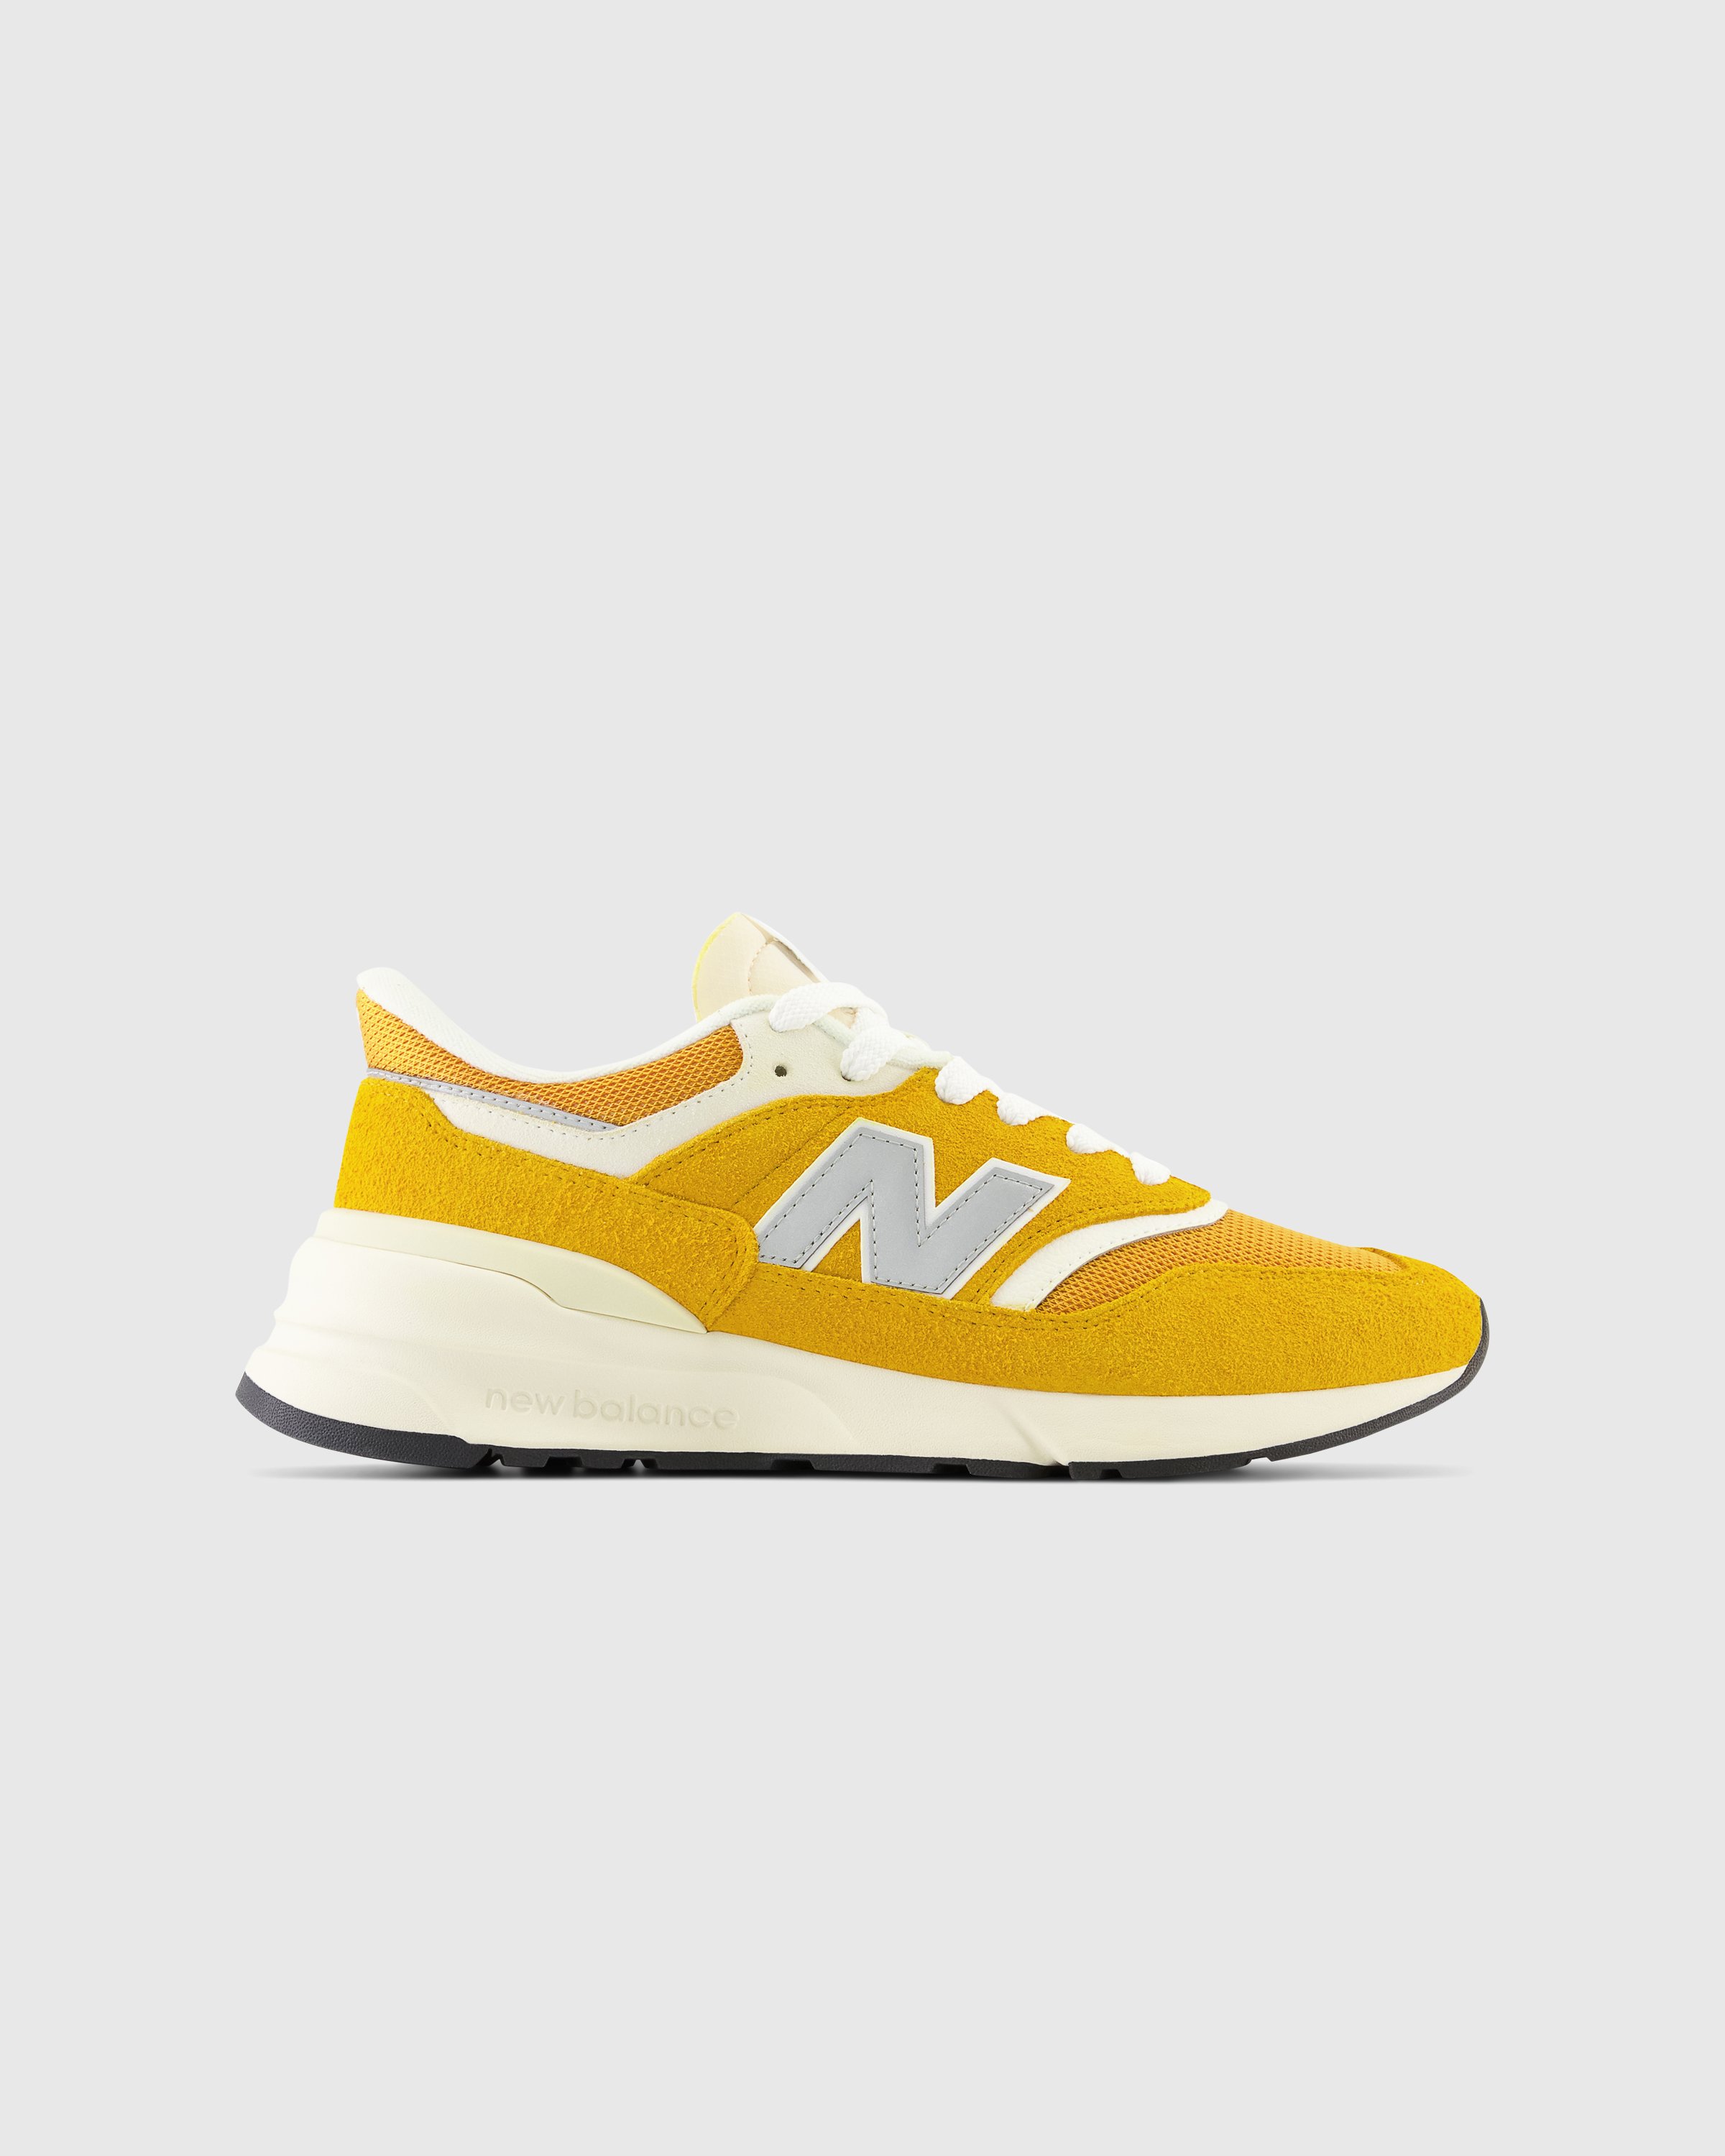 New Balance - U 997R CB Varsity Gold - Footwear - Yellow - Image 1